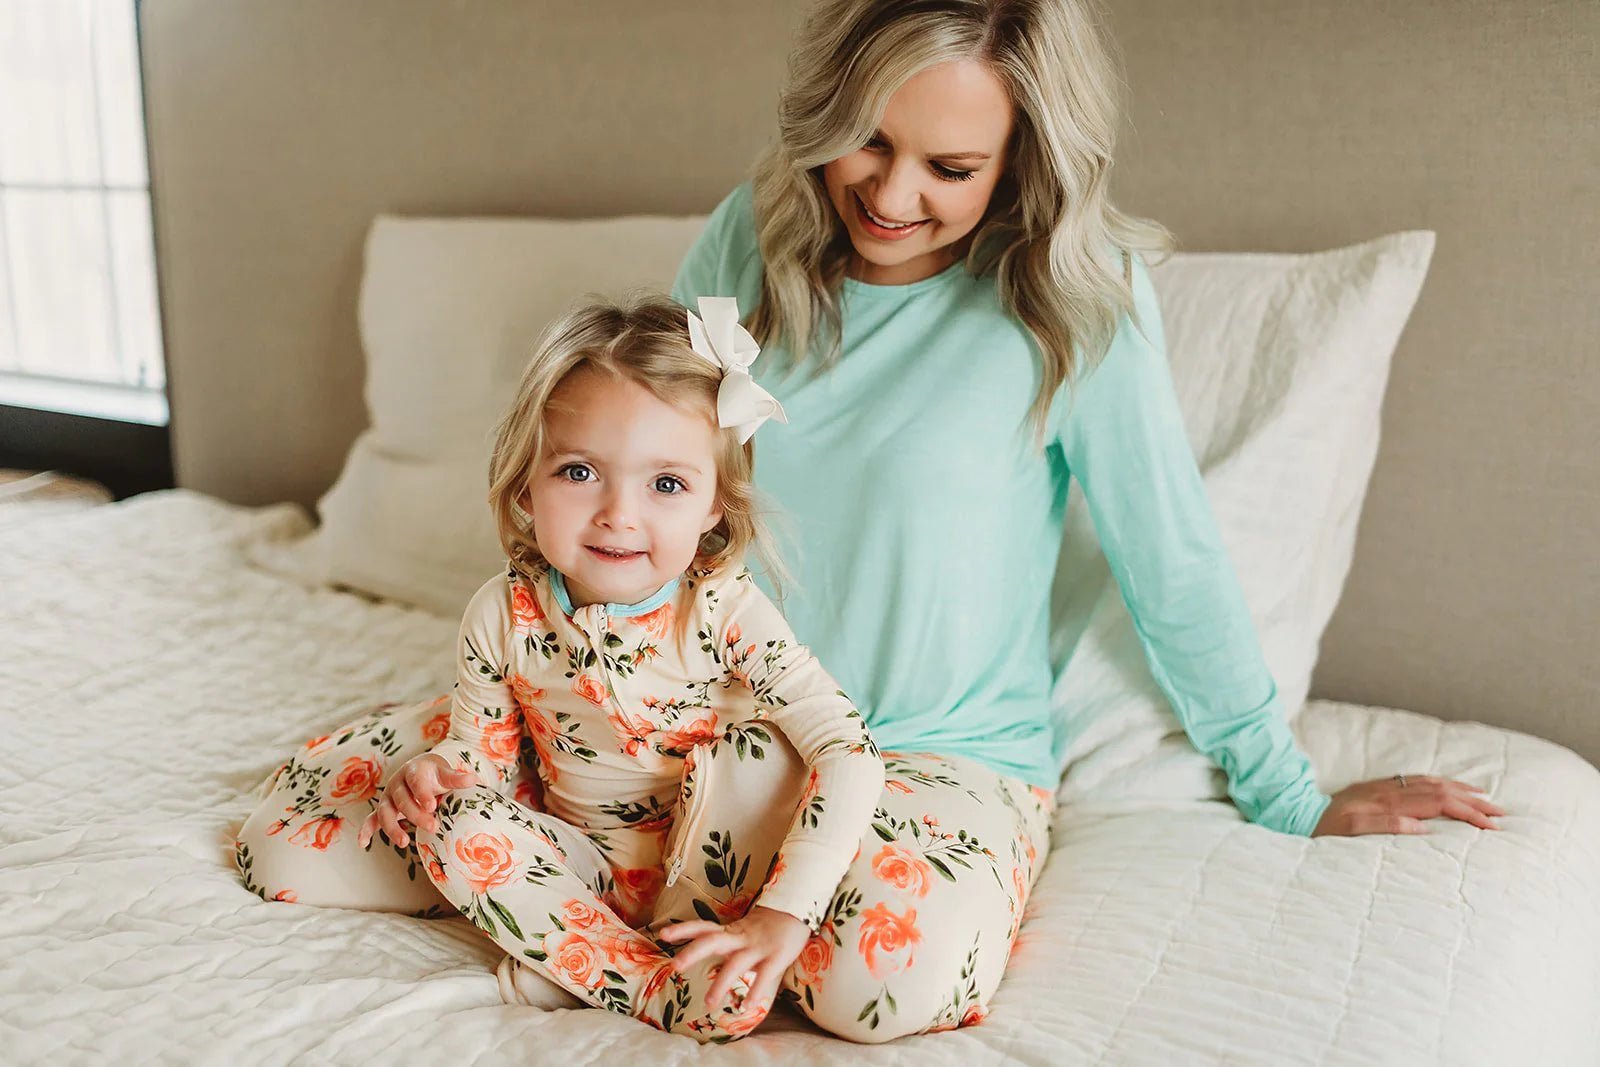 10 Comfy Postpartum Outfit Essentials For Hospital And Home